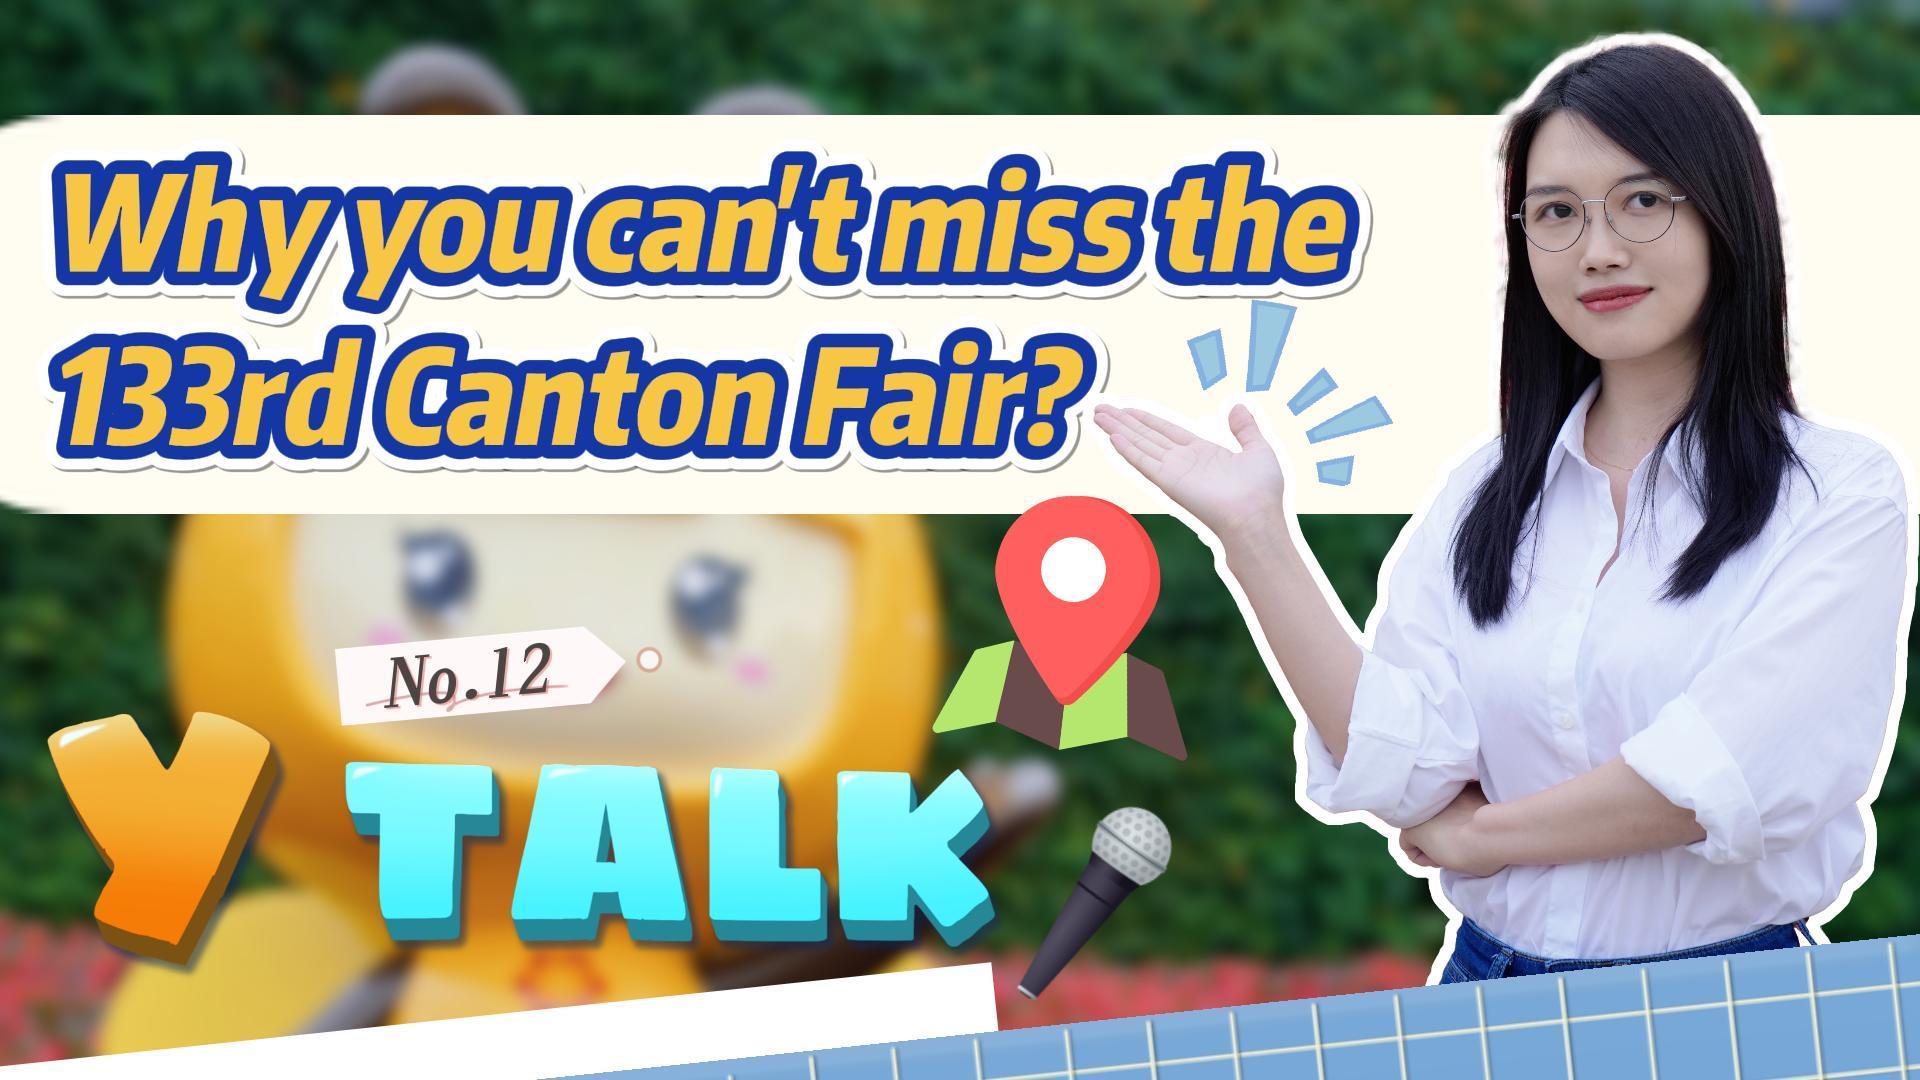 Y talk⑫｜Why you can't miss the 133rd Canton Fair?全新的广交会，千万别错过！